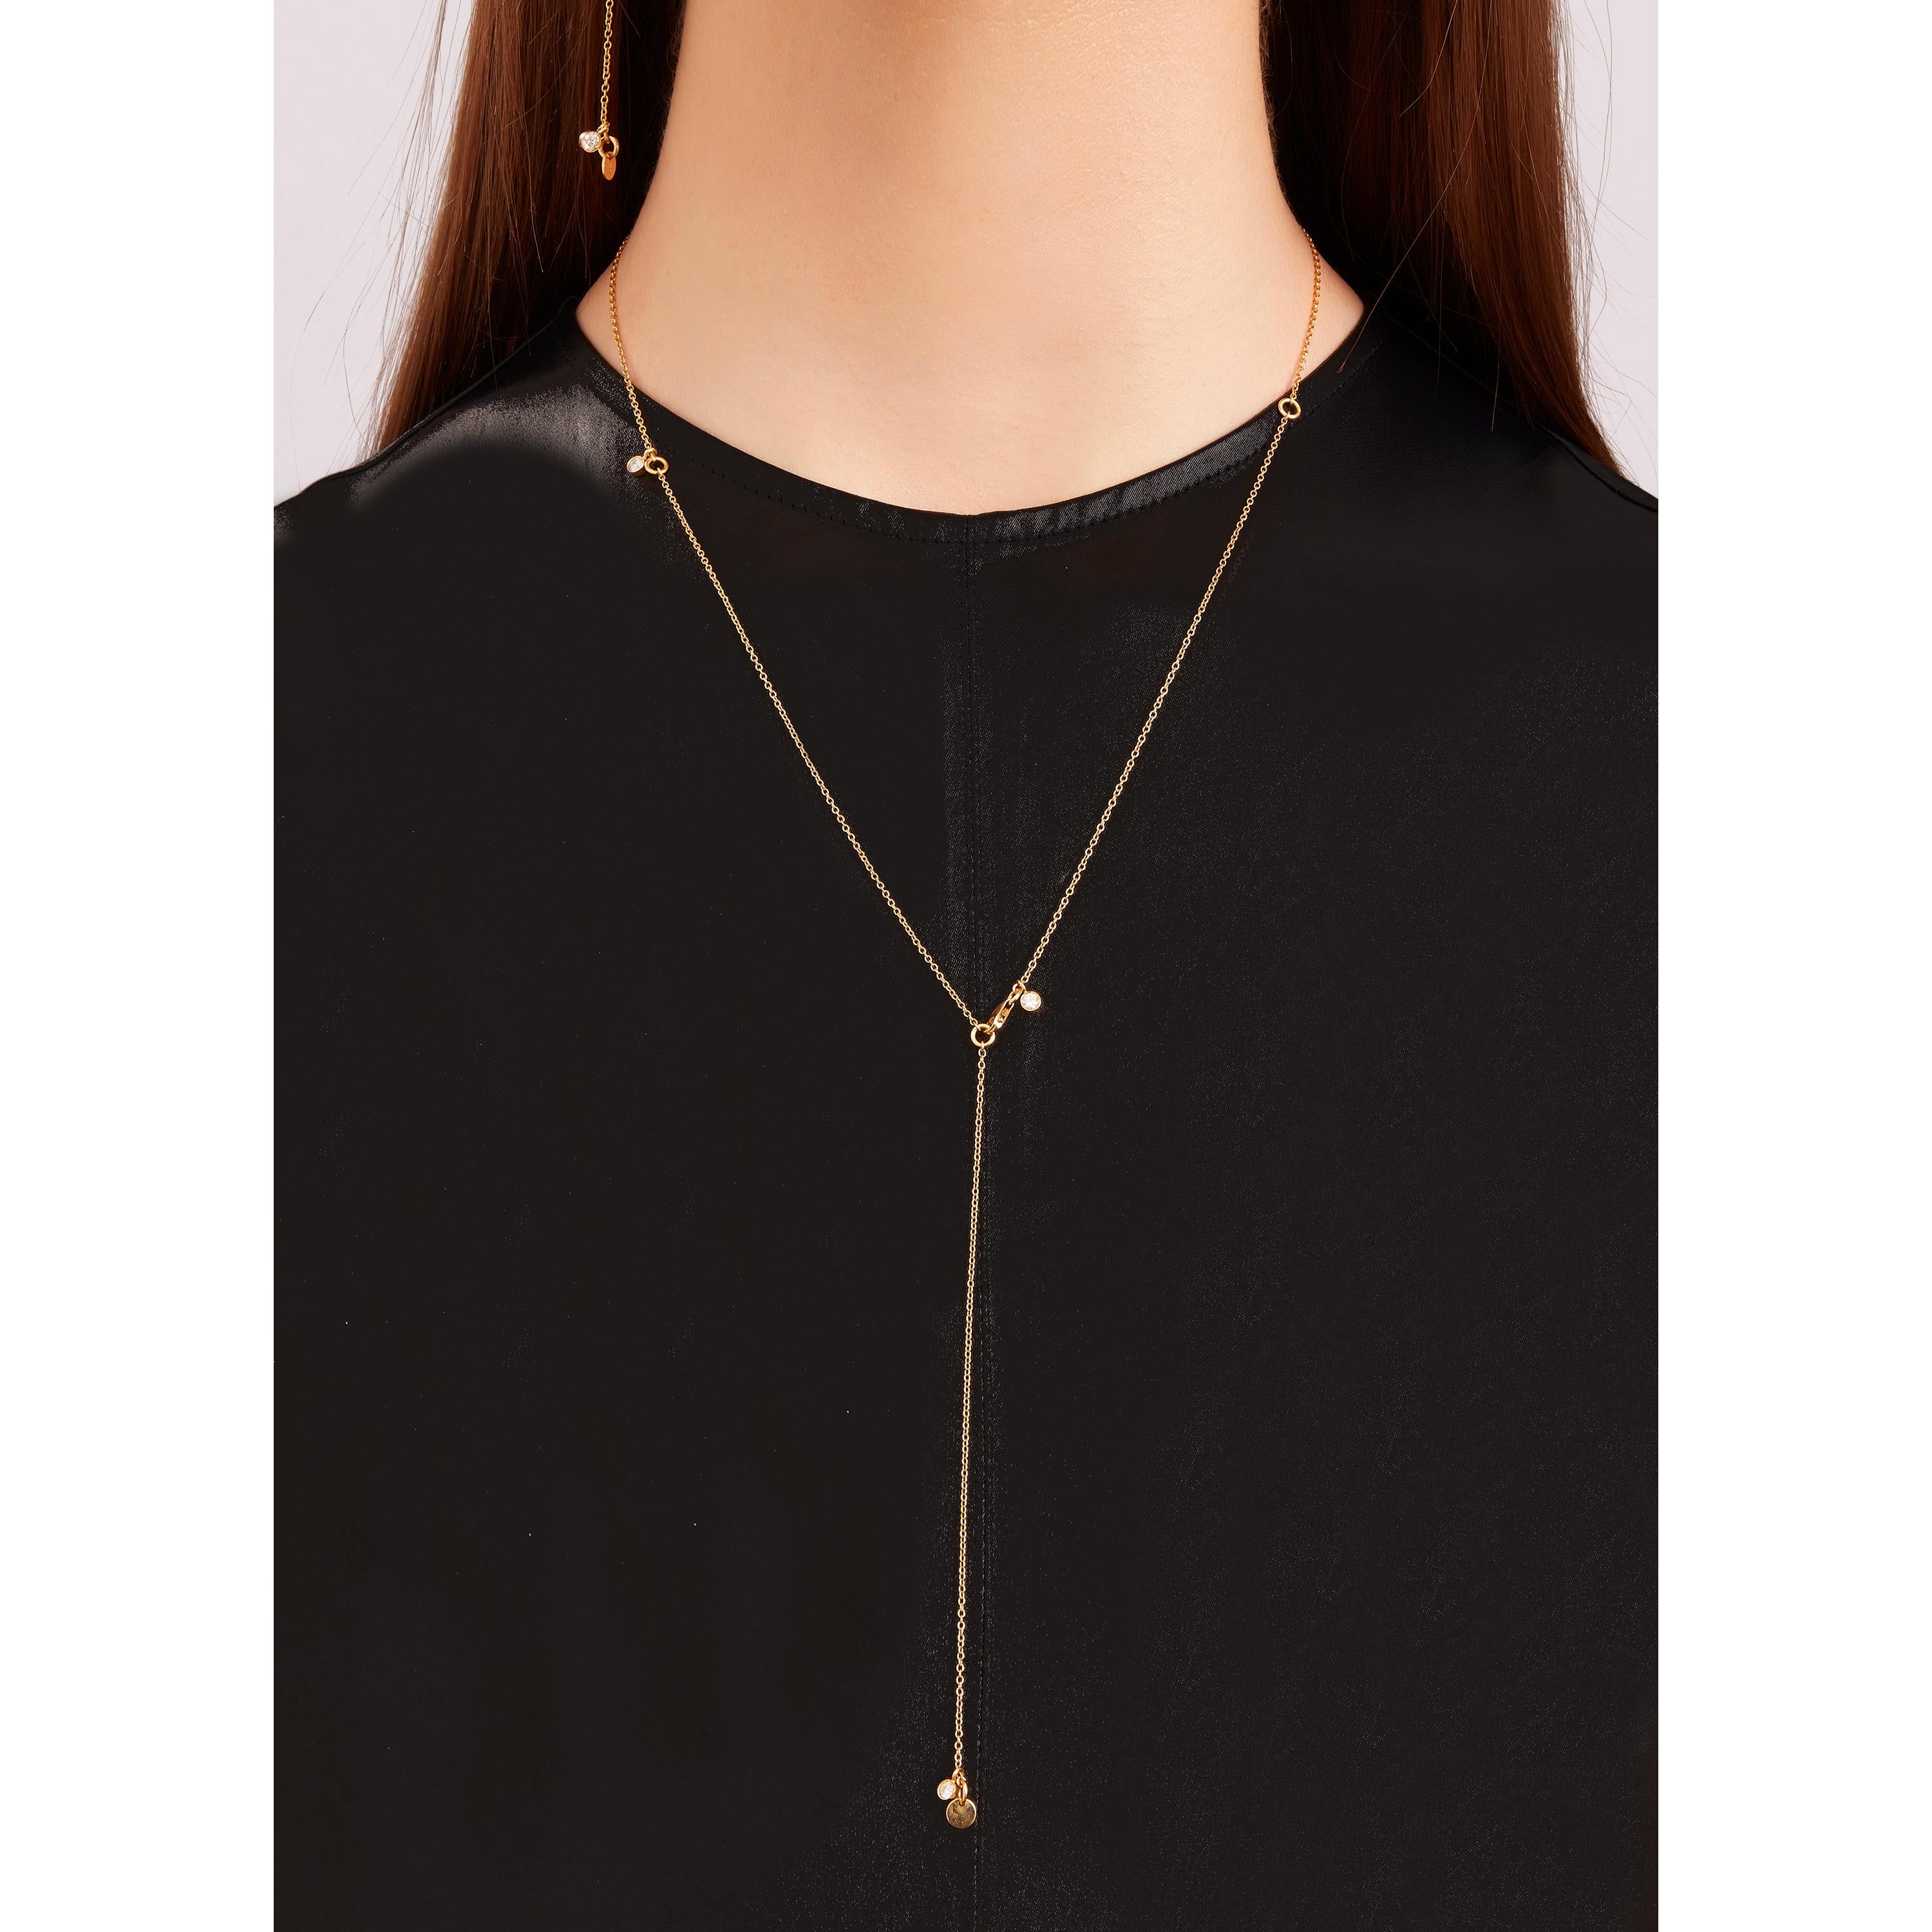 Contemporain Nathalie Jean Contemporary 0.33 Carat Diamond Pendant Chain Necklace Gold Pendentifs en vente